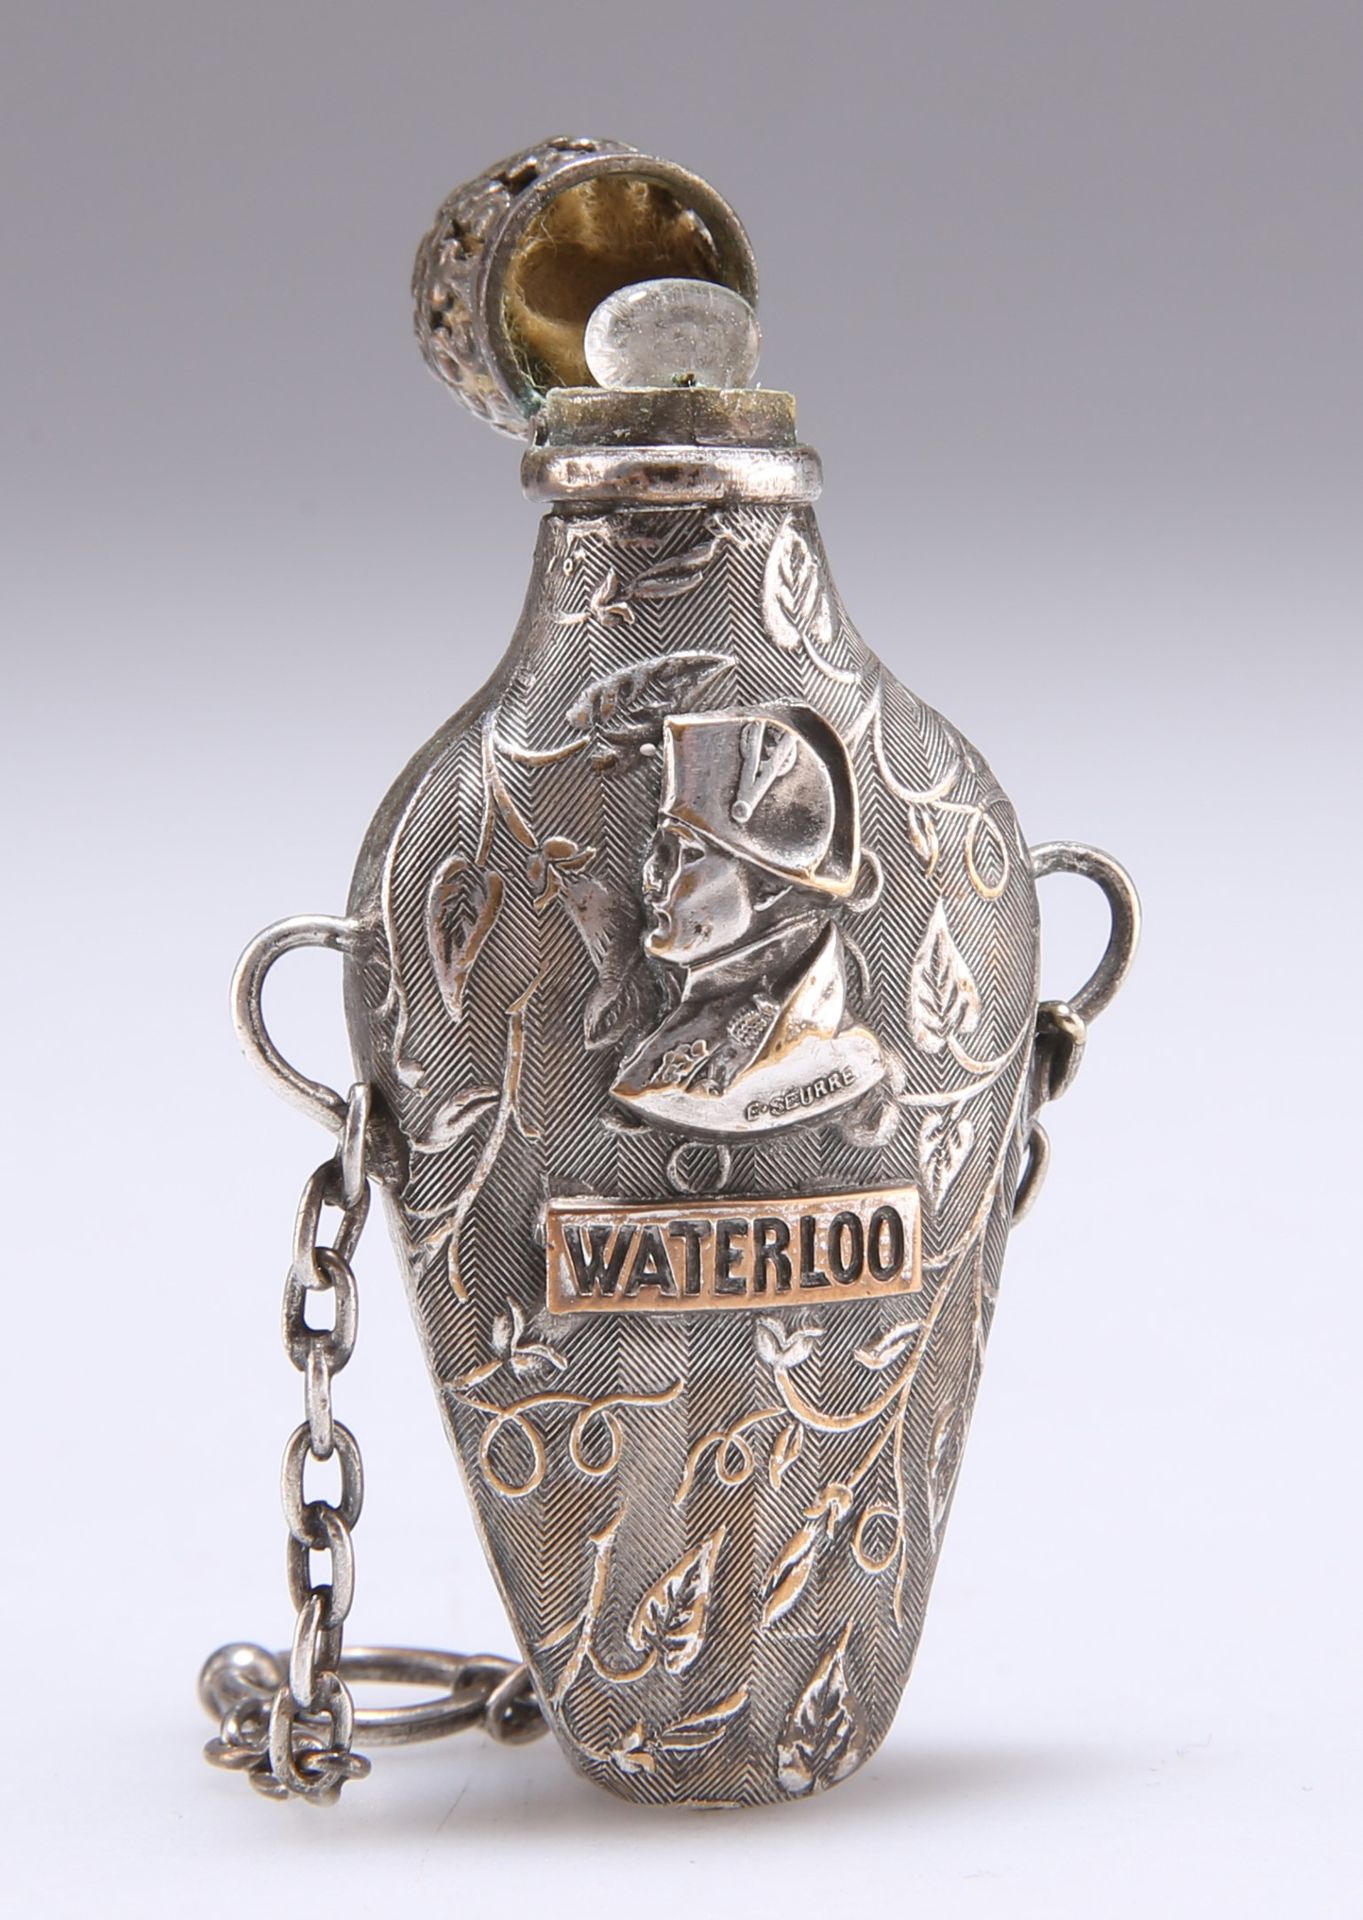 Null 19世纪银镀 "WATERLOO "香水瓶，扁平的卵形瓶身上有拿破仑的半身像，上面有 "WATERLOO "旗帜。高6厘米10015060